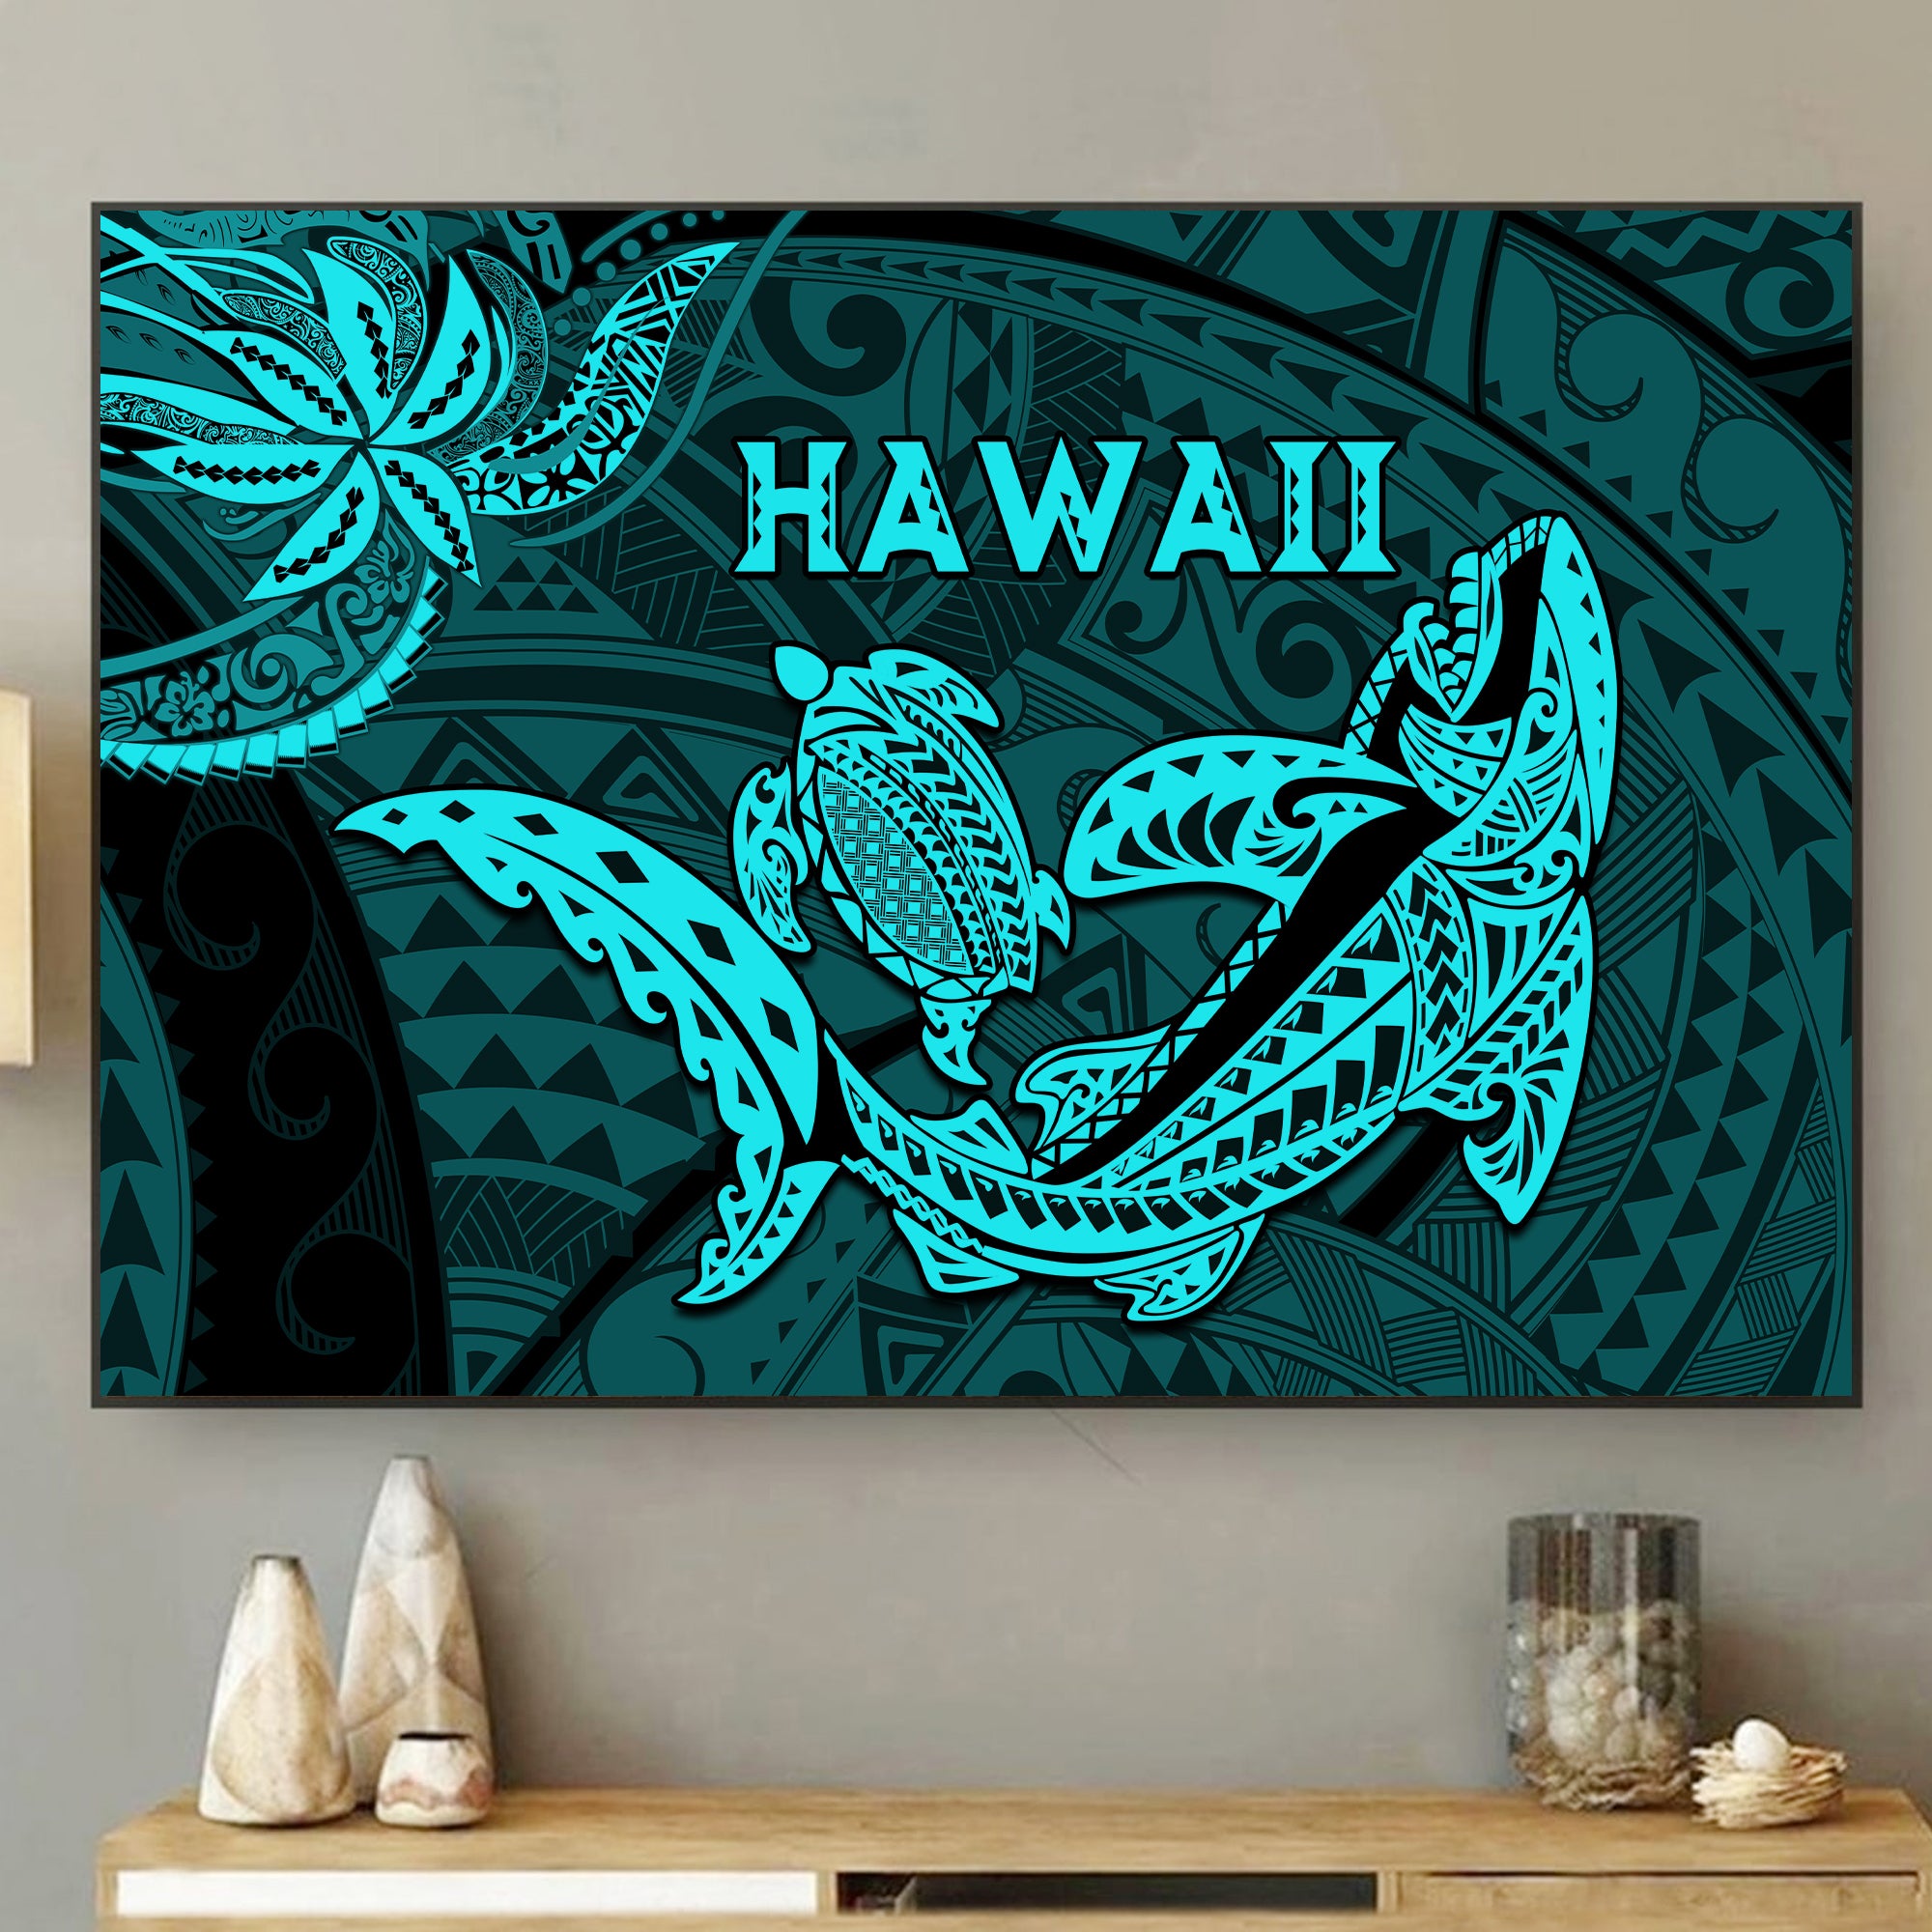 hawaii-shark-and-turtle-5-pieces-canvas-wall-art-with-turquoise-kakau